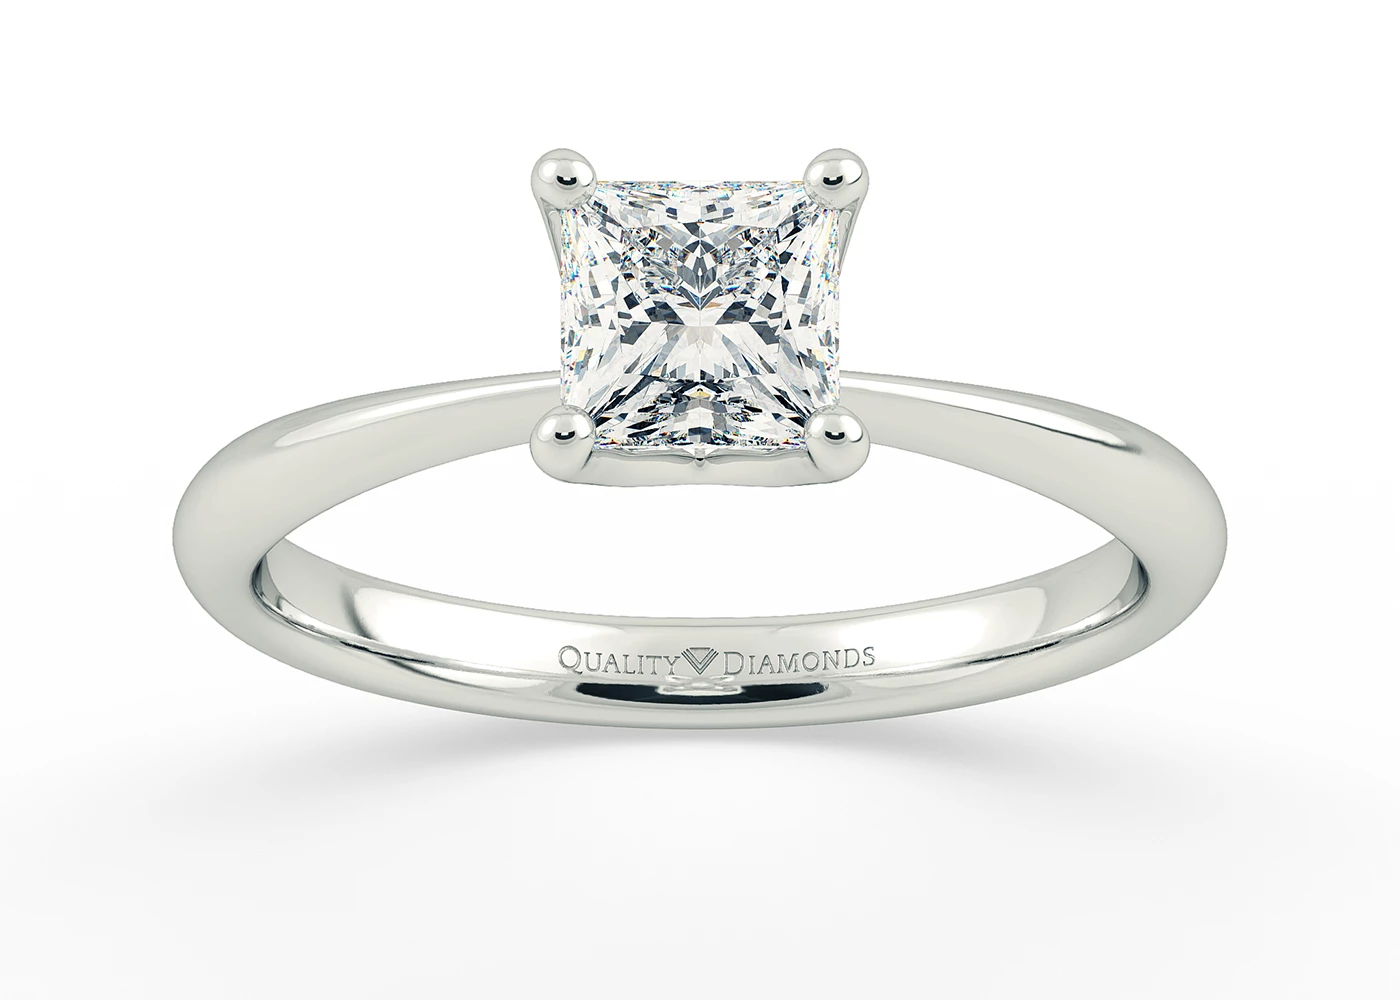 Princess Amorette Diamond Ring in 9K White Gold